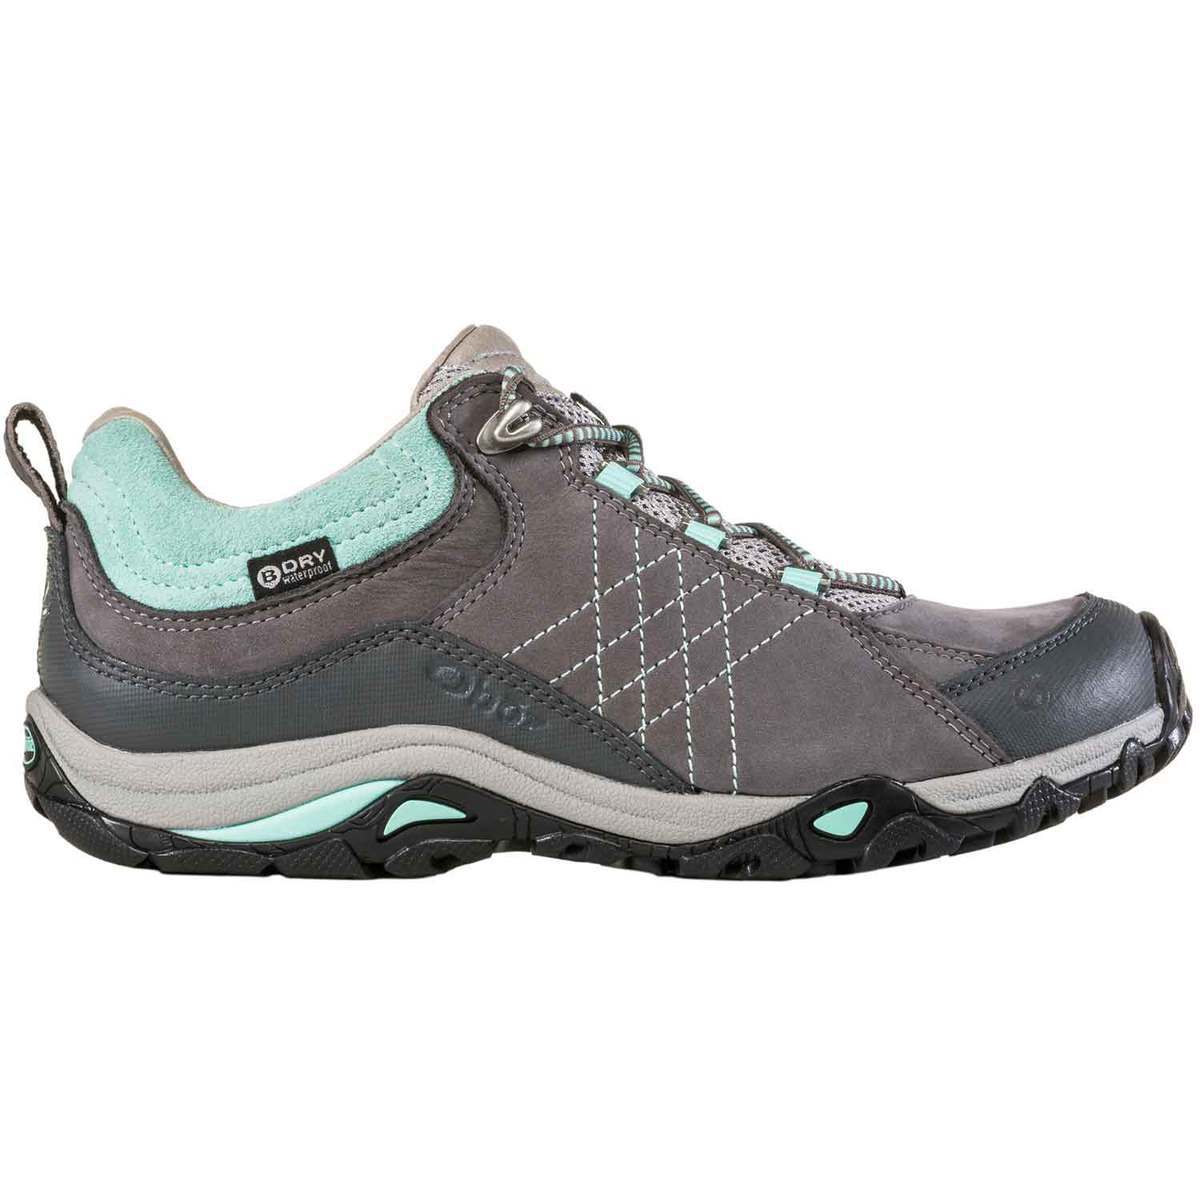 Oboz Women's Sapphire Waterproof Low Hiking Shoes - Charcoal - Size 7.5 ...